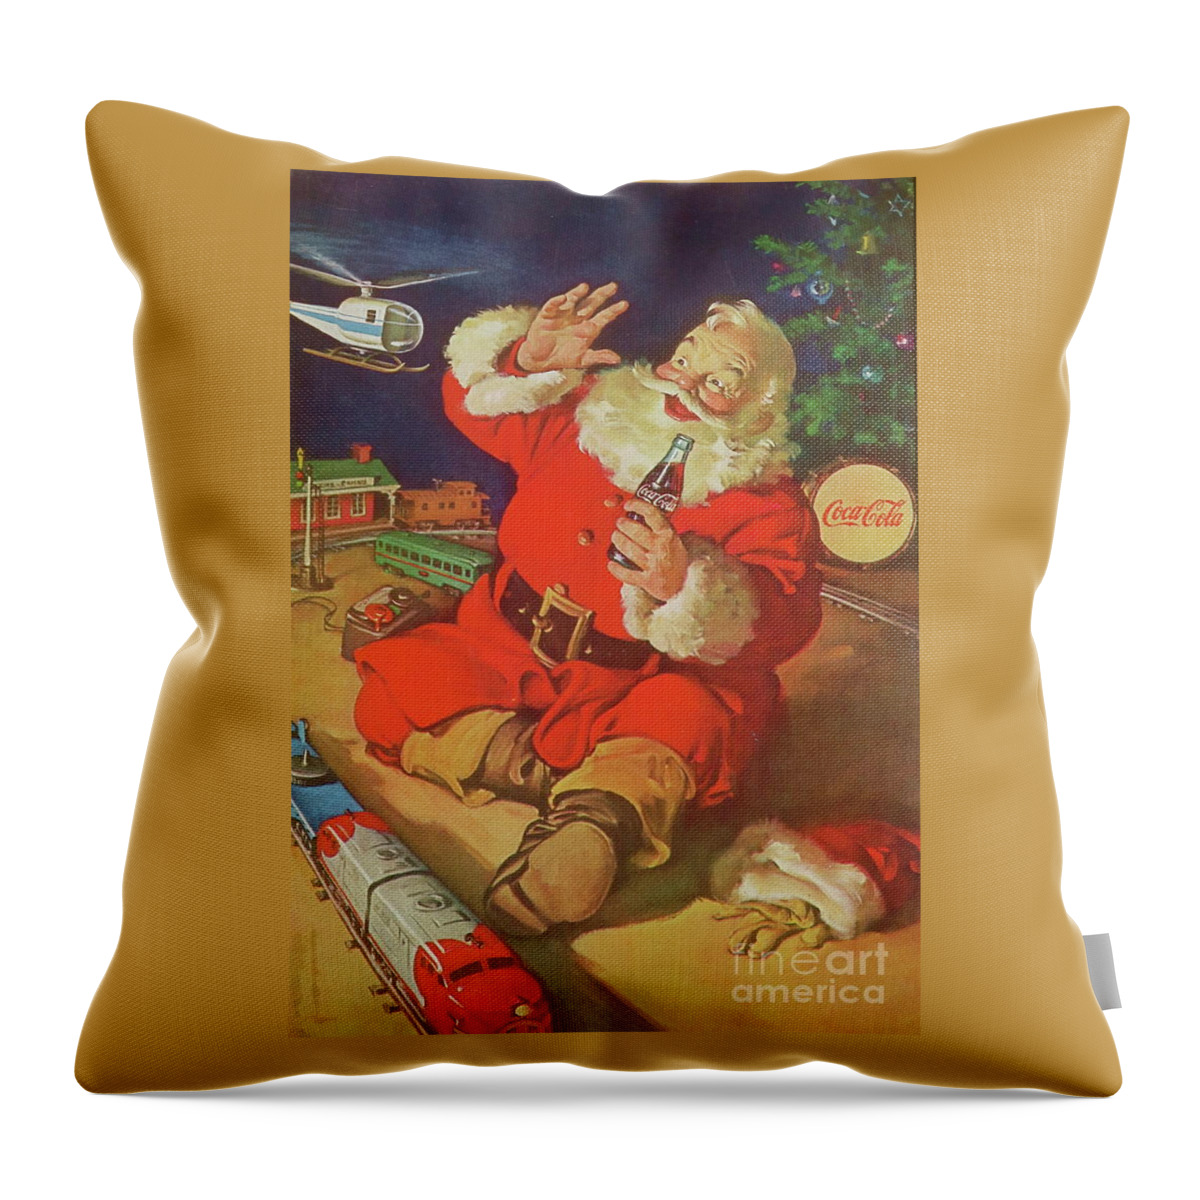 Coca Cola Old Santa Claus Image. Throw Pillow featuring the photograph Coca Cola Old Santa Claus image by Robert Birkenes